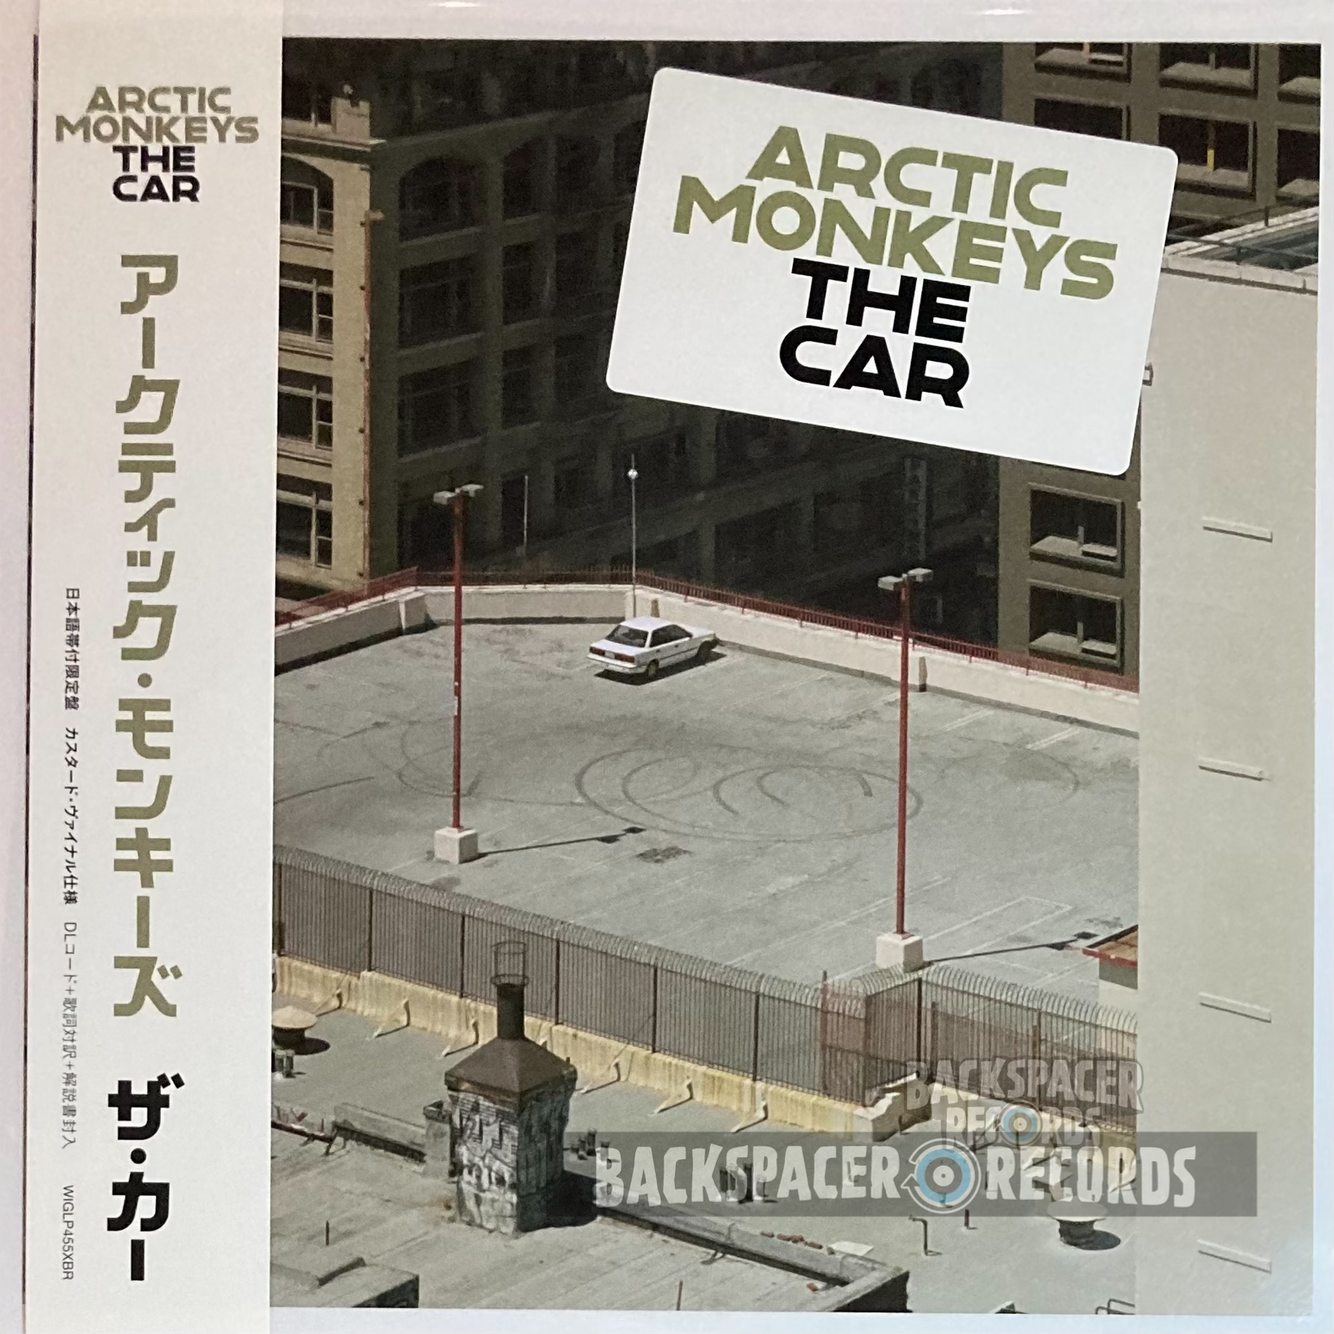 Arctic Monkeys - The Car LP (Limited Edition)